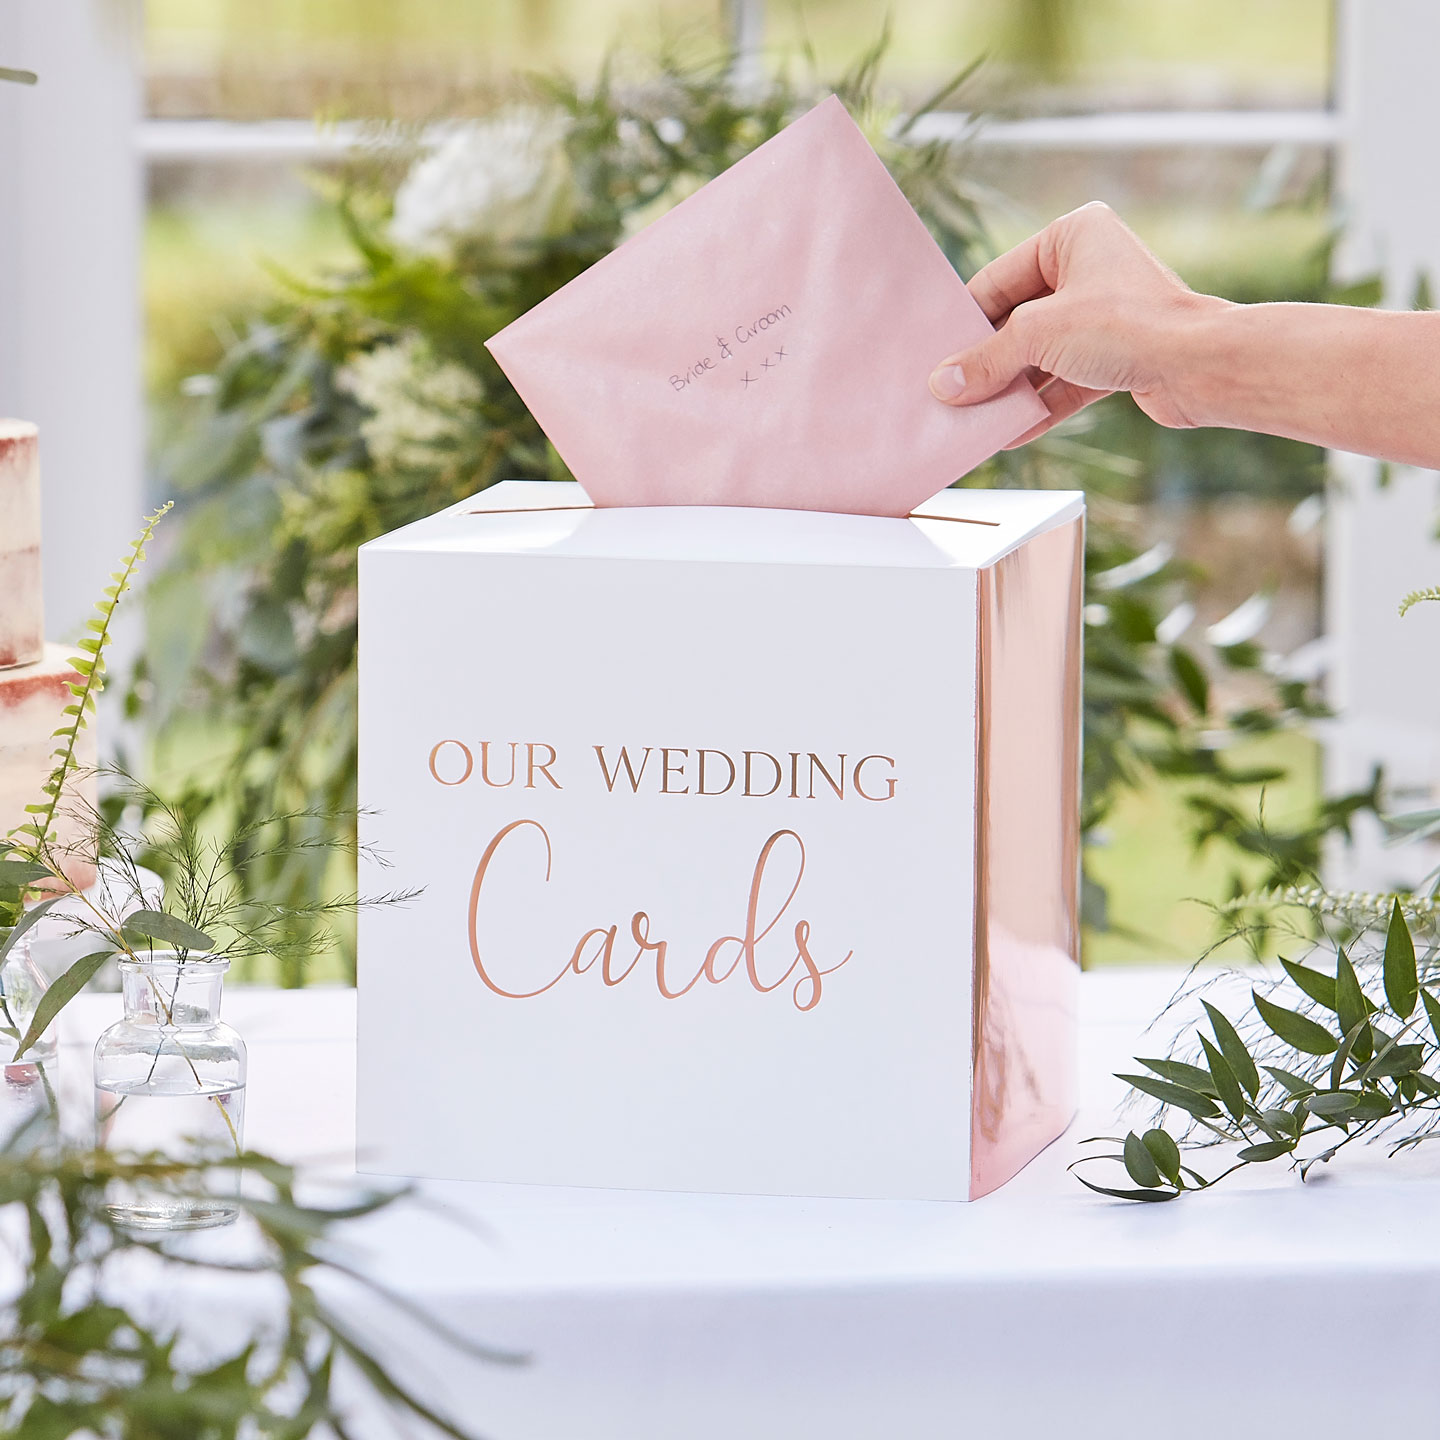 Gold Wedding Card Holder Post Box // Wedding Card Box // 